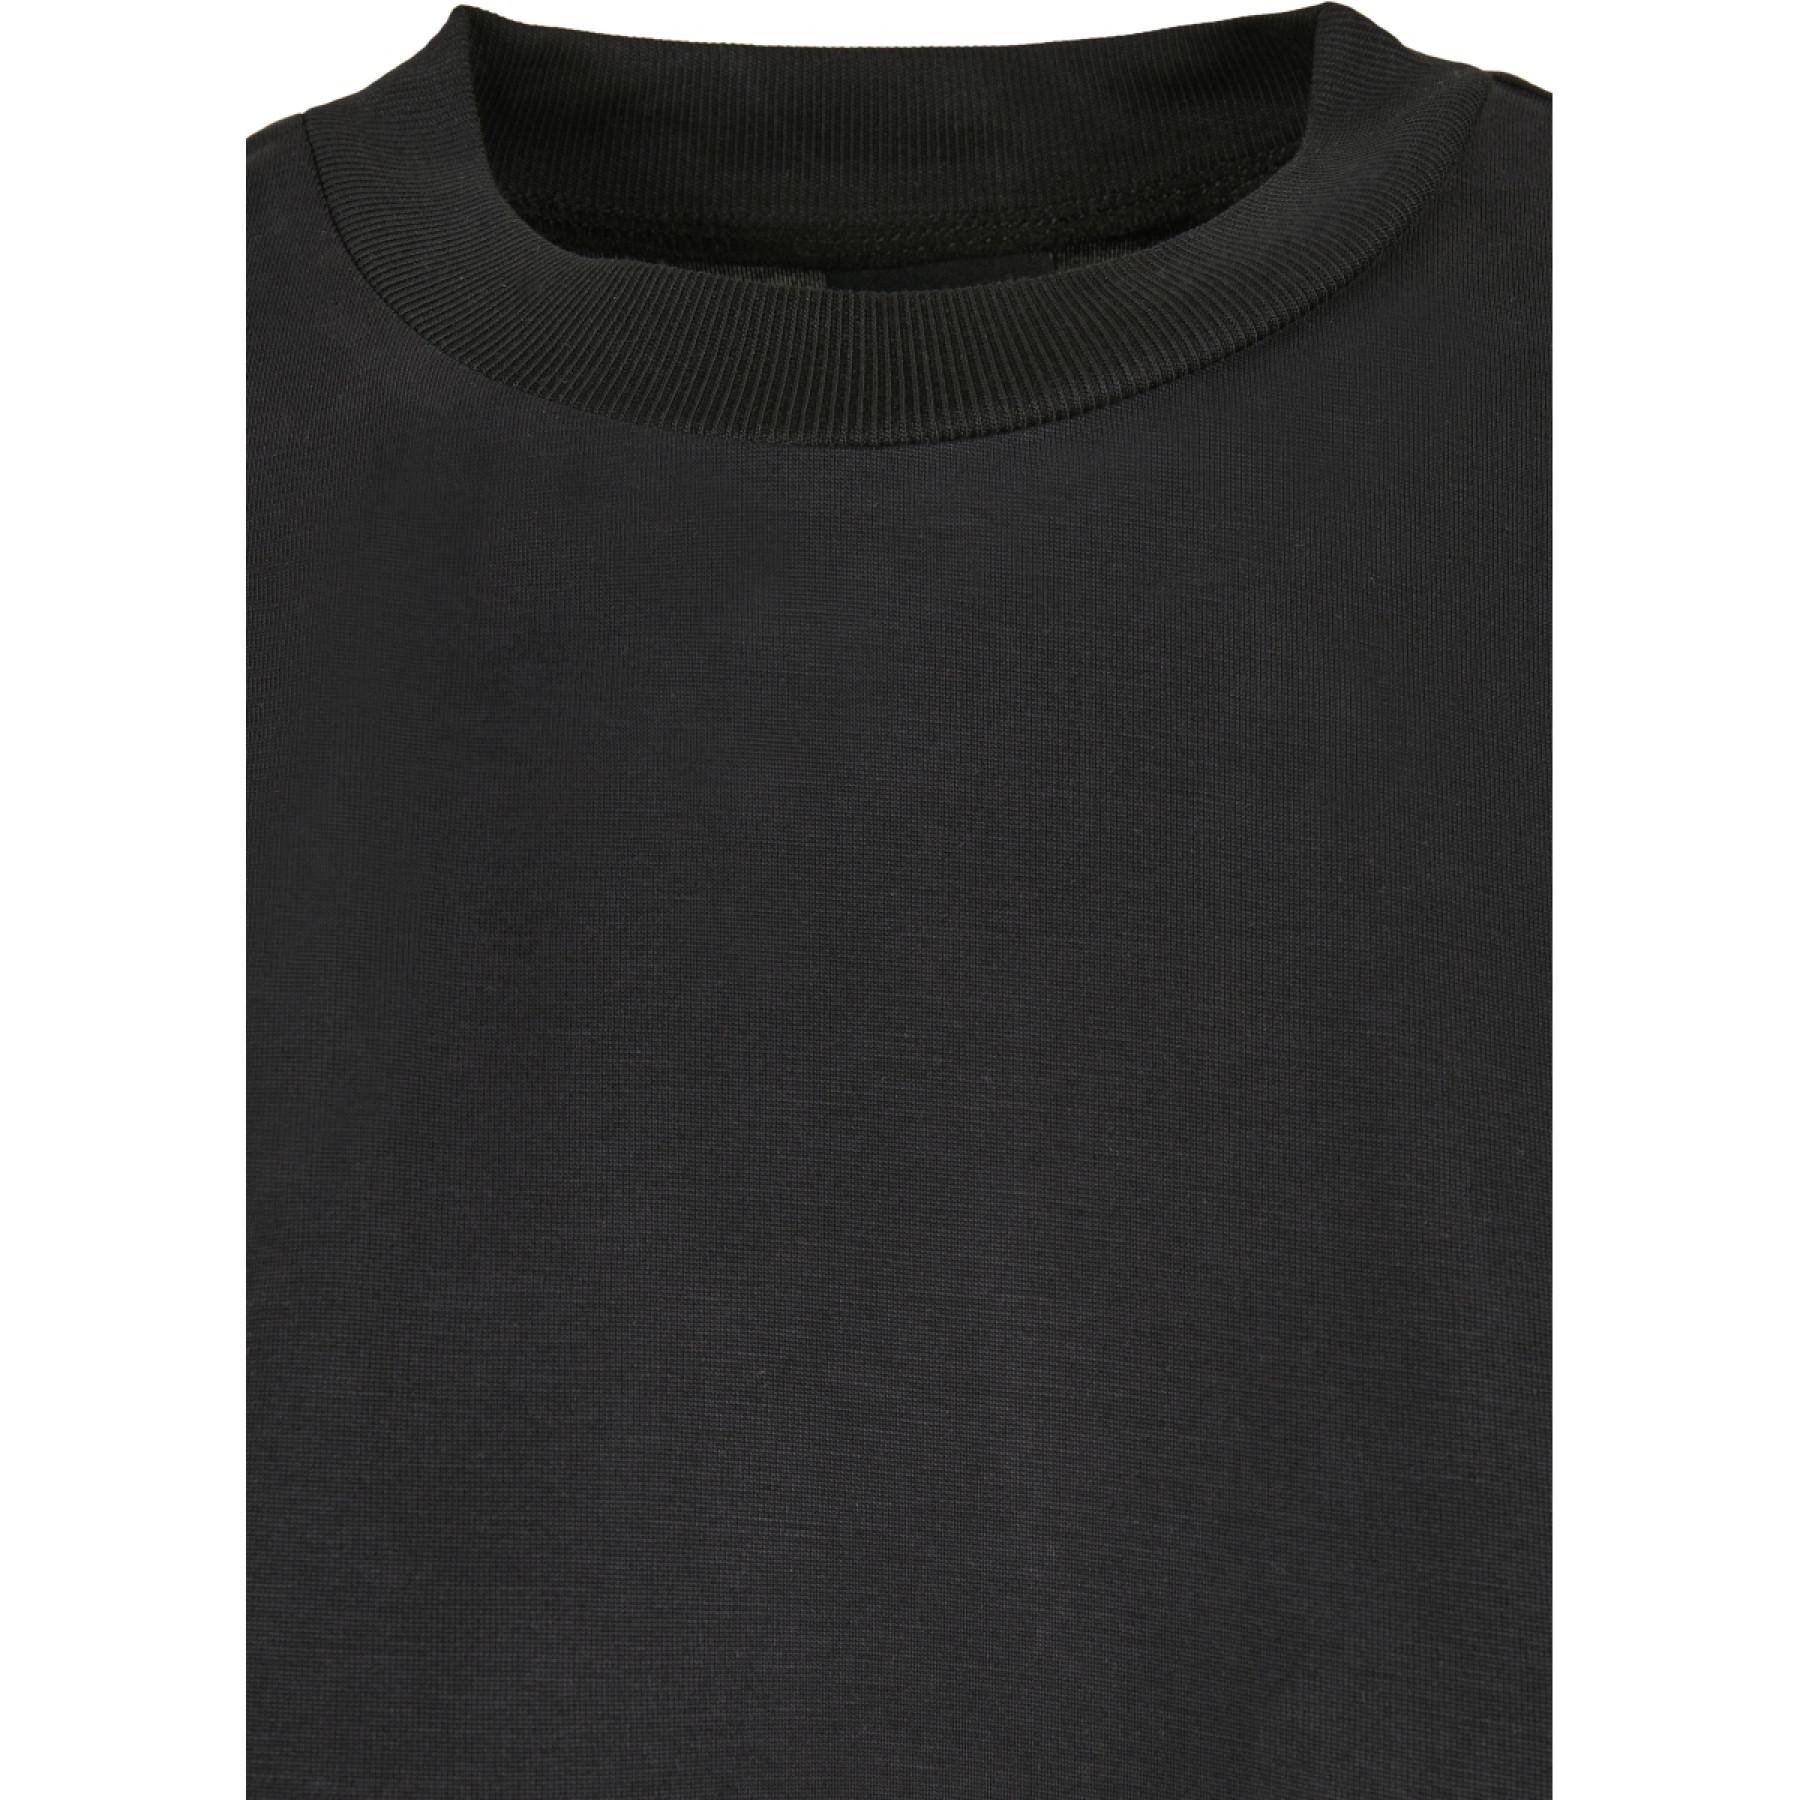 Camiseta de tirantes mujer Urban Classics modal ded shoulder